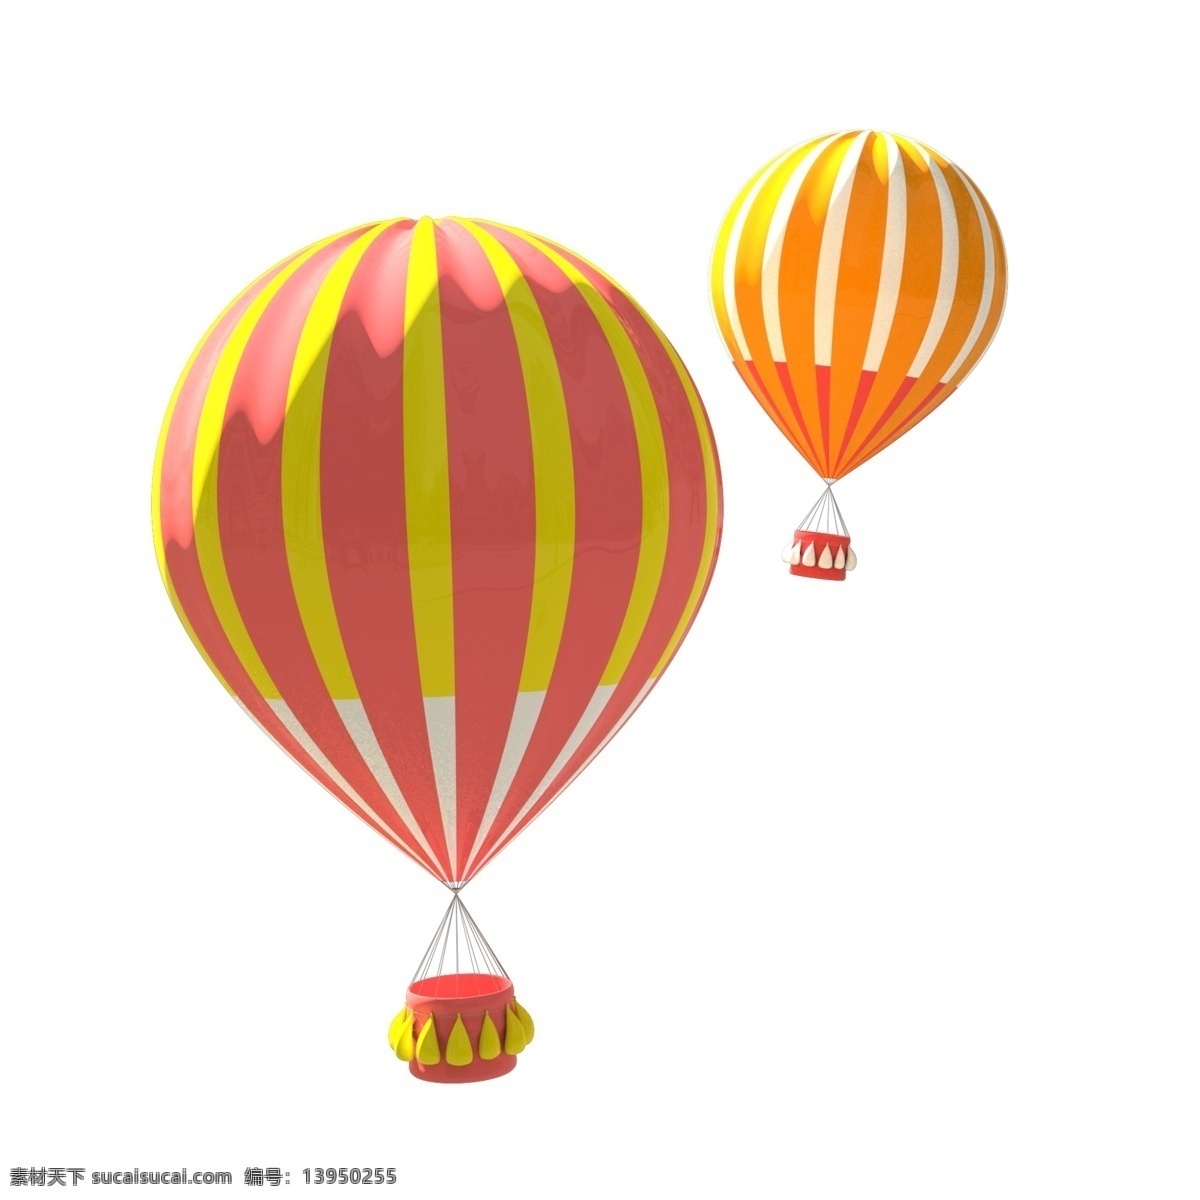 3d 卡通 糖果 色 热气球 立体 c4d 电商 糖果色 糖果色热气球 卡通热气球 粉色 橙色 粉色热气球